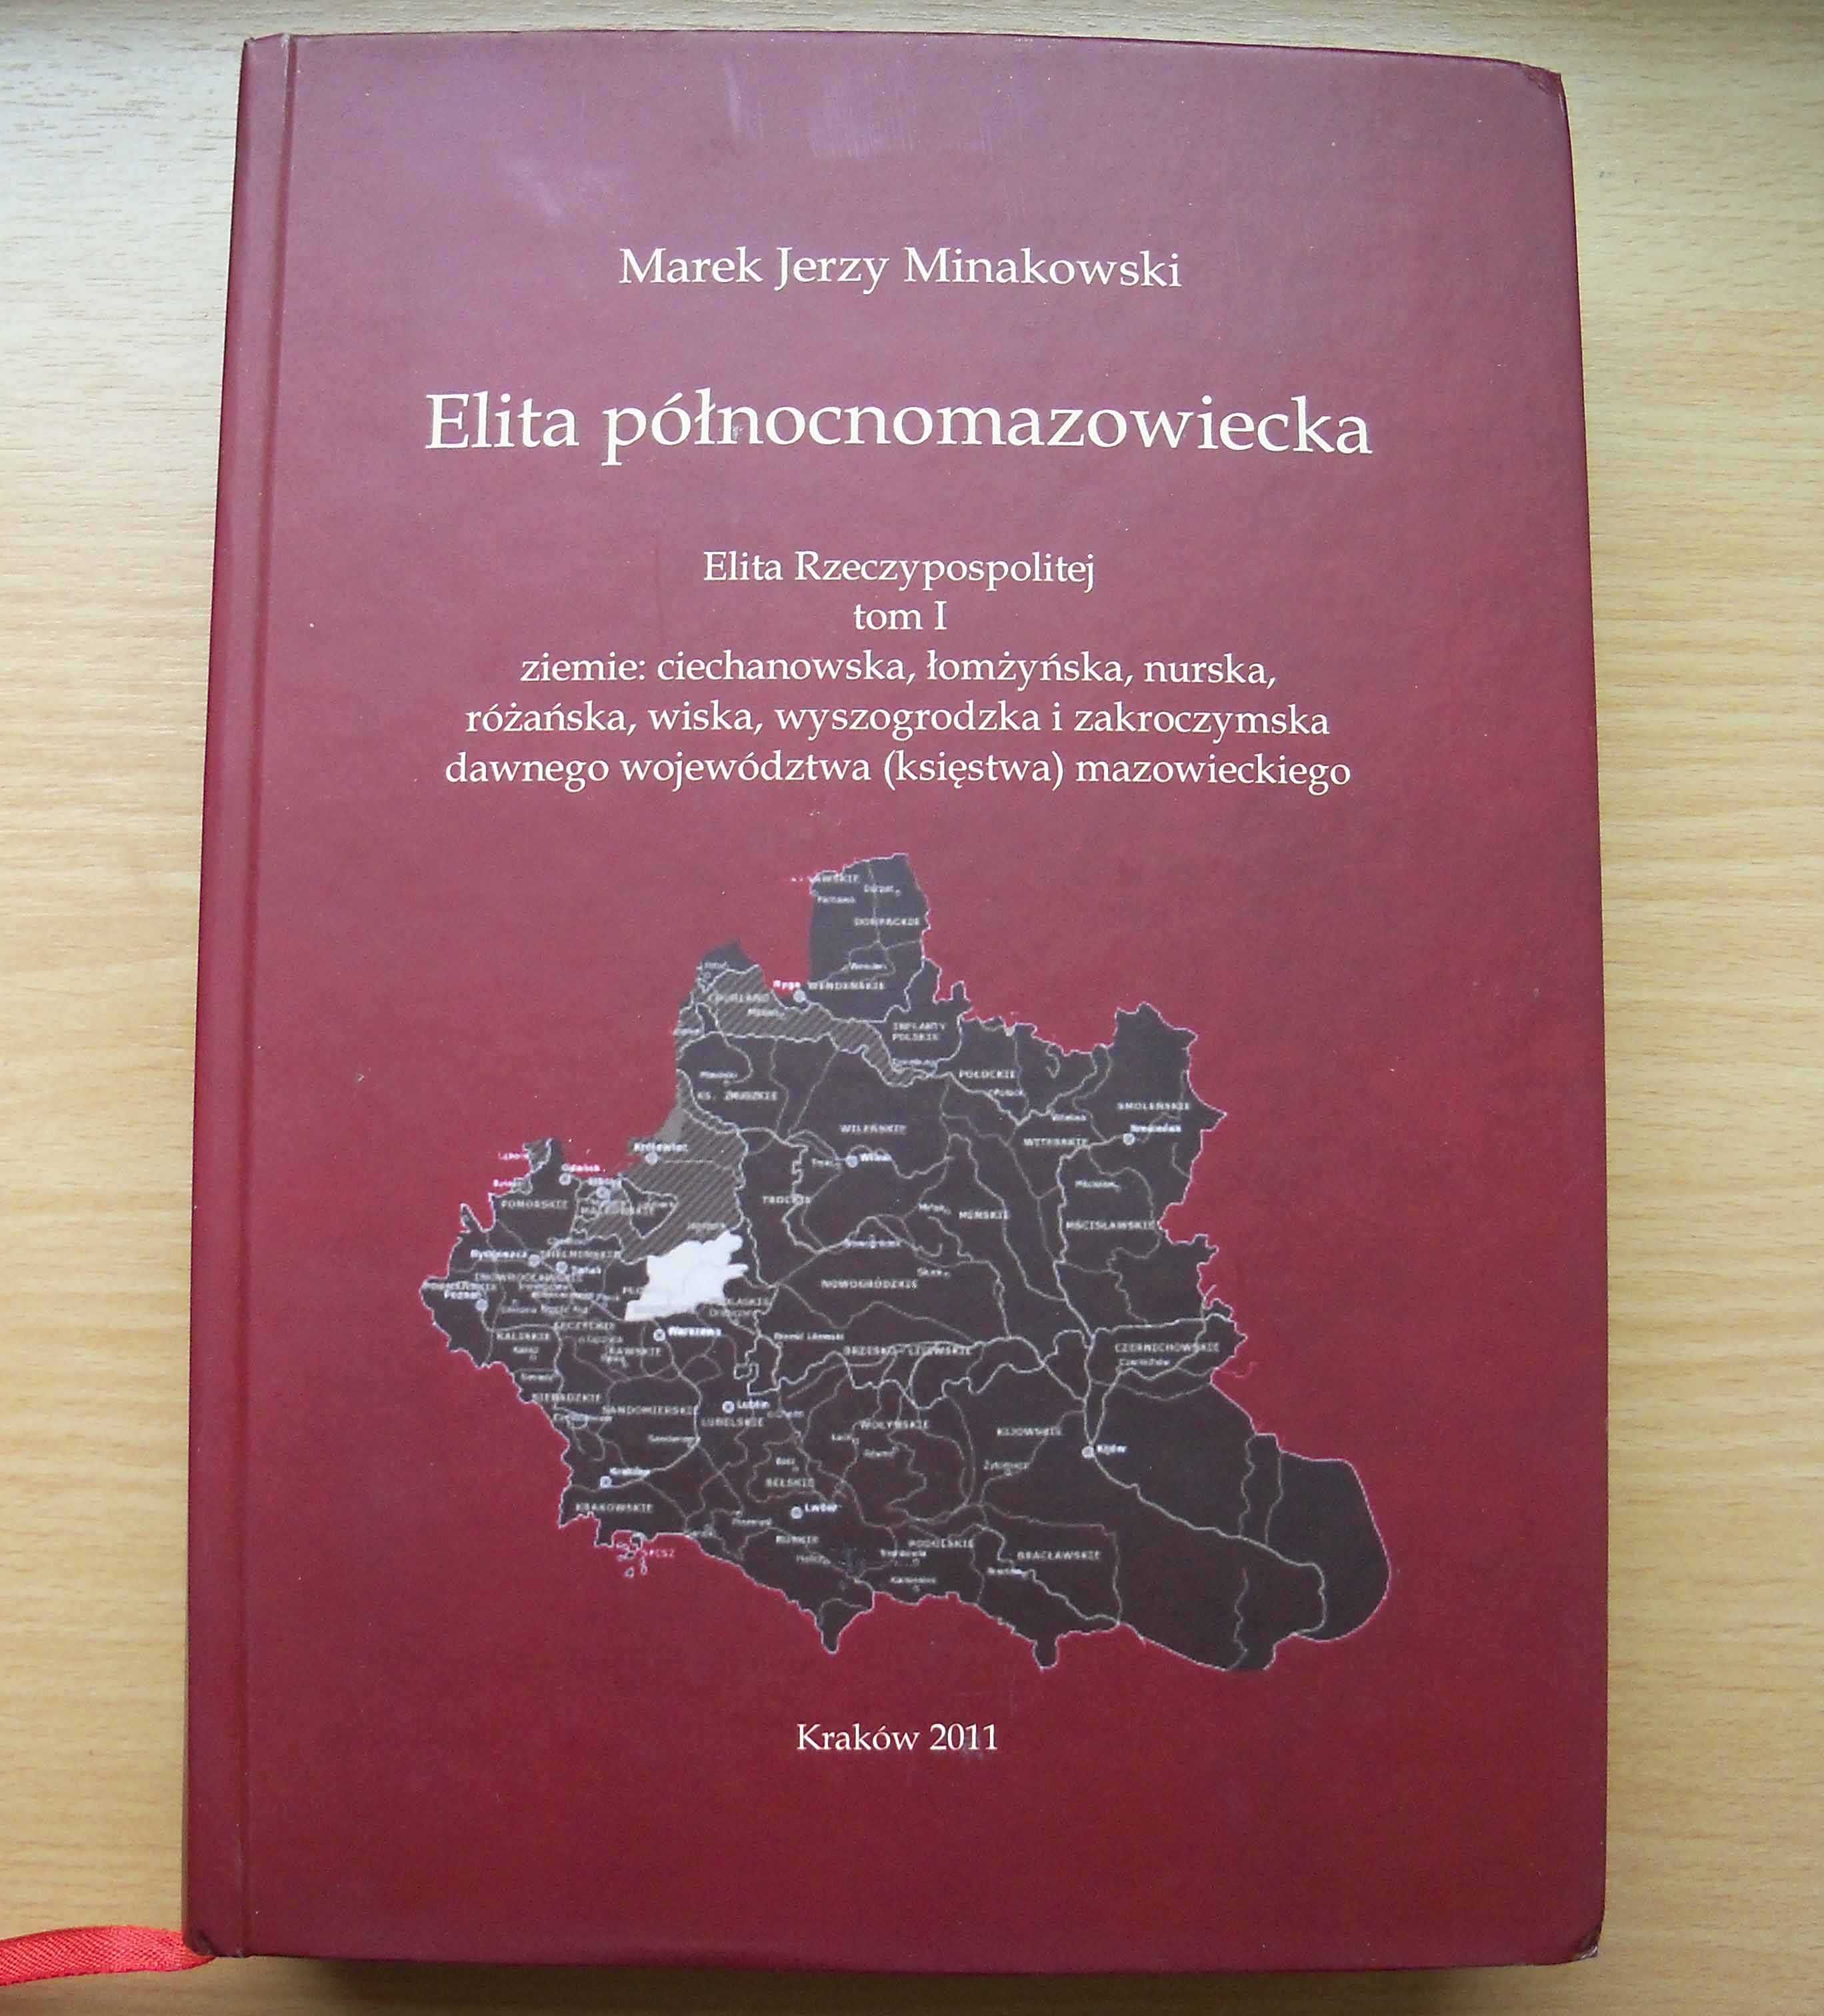 Elita północnomazowiecka - M.J. Minakowski - 2011